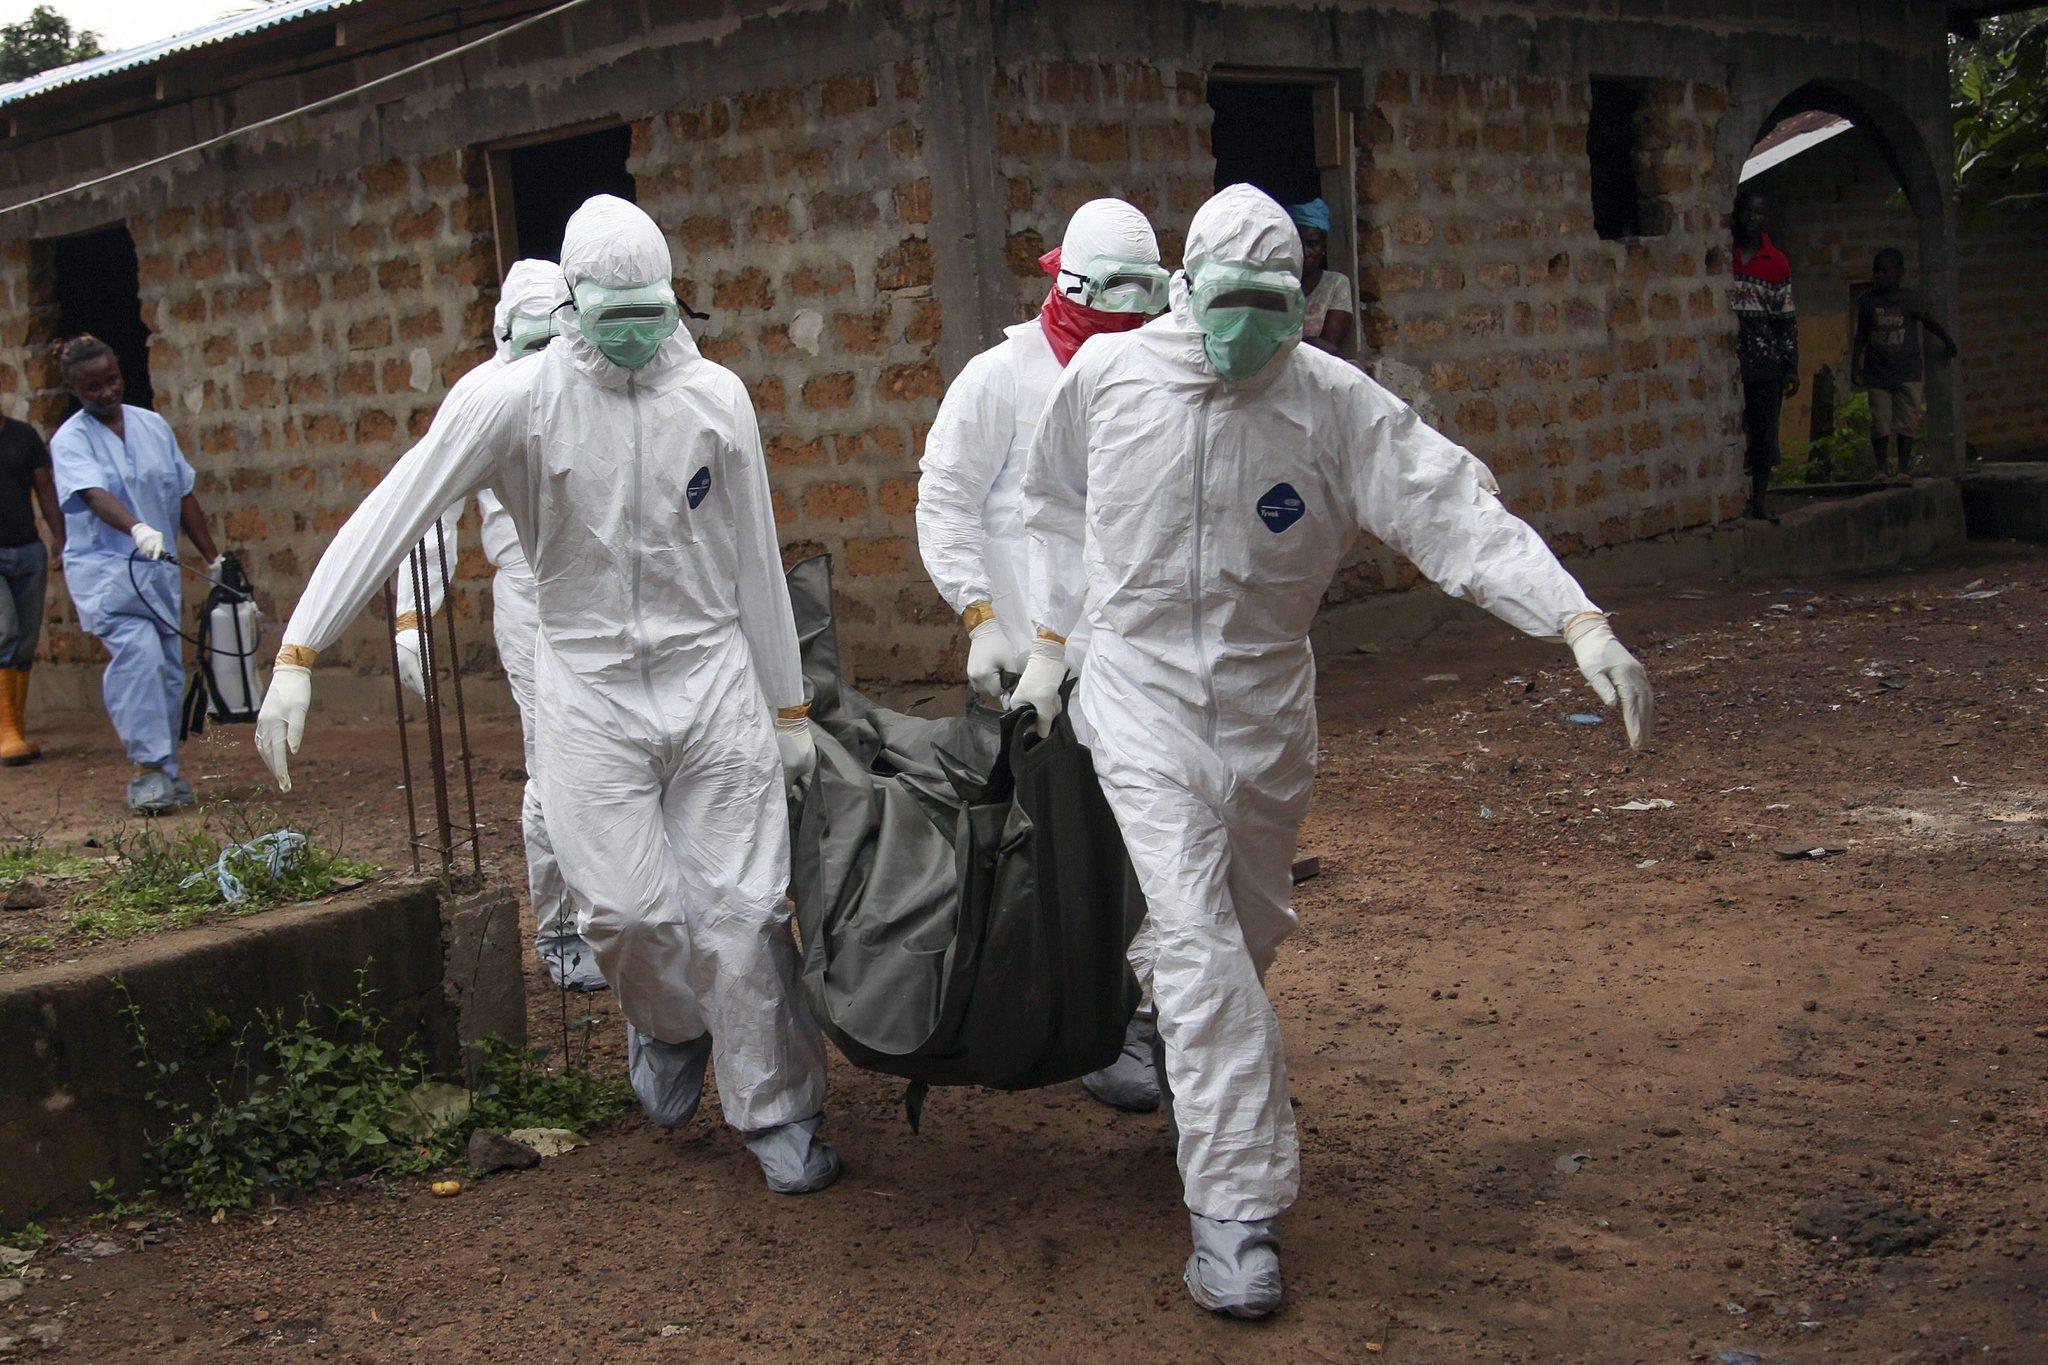 hc-op-ebola-myths-echo-african-stereotypes-201-001.jpg